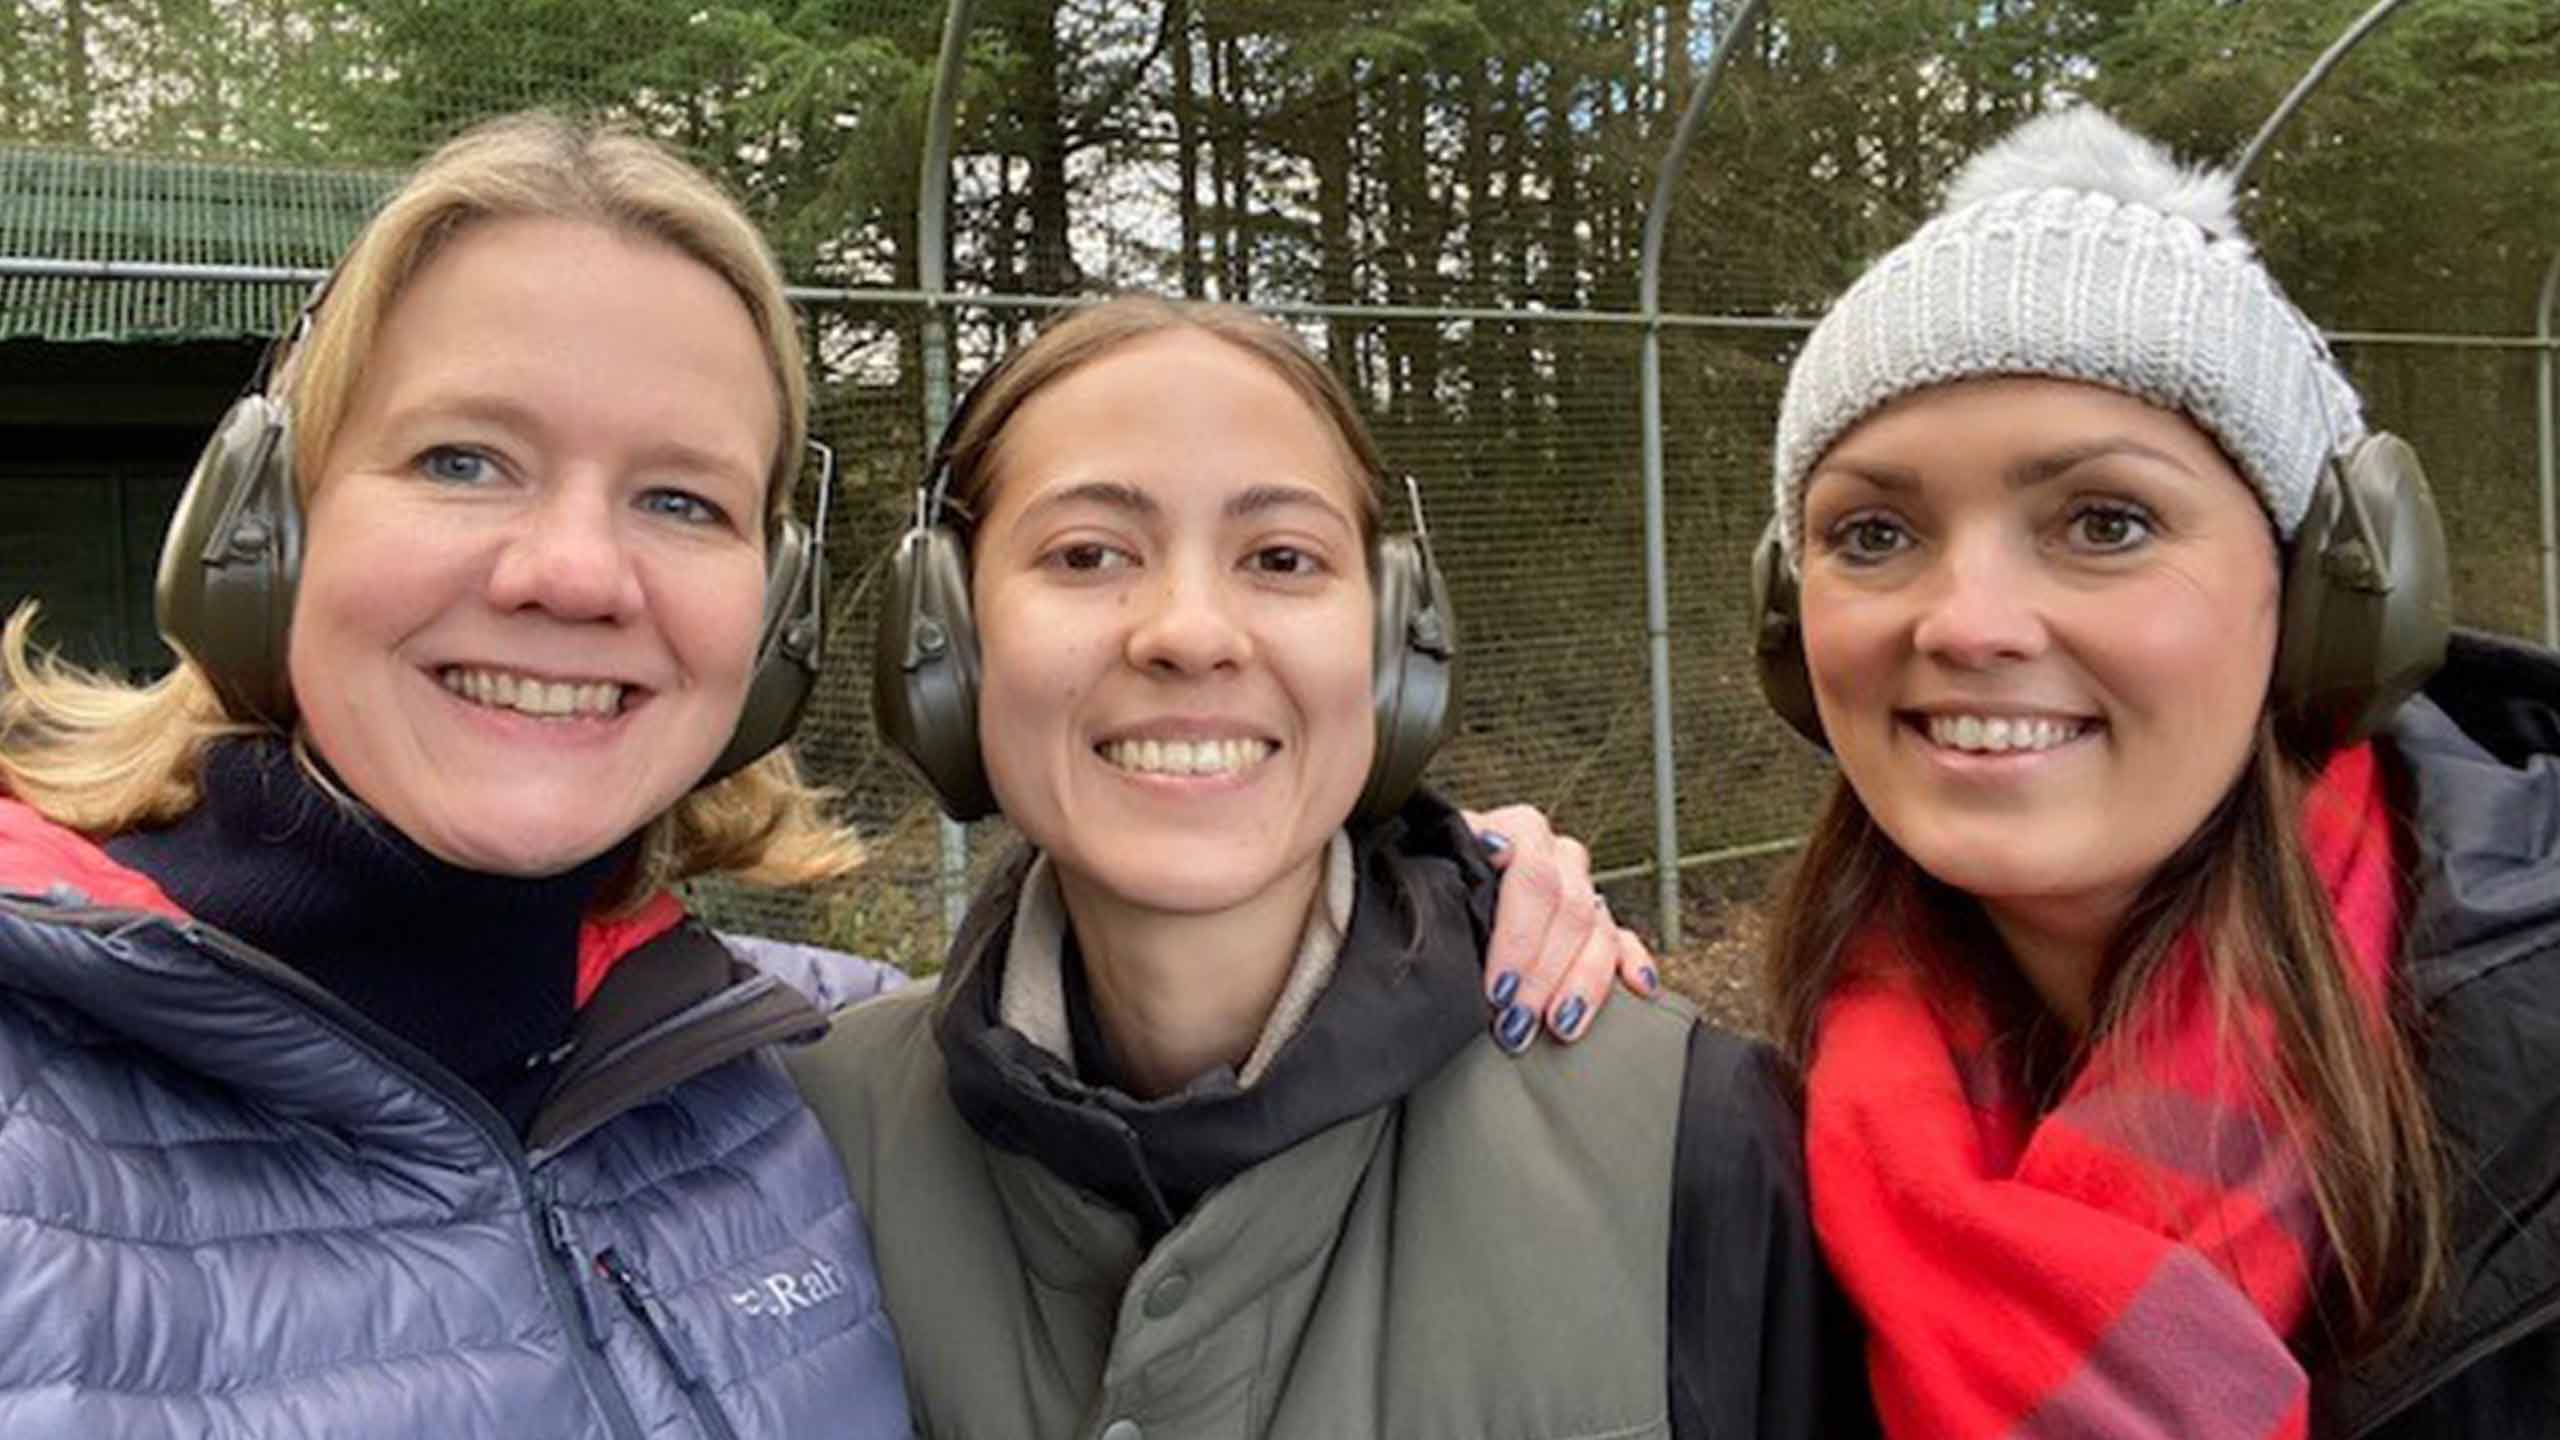 The Media Shop team - at a shooting range wearing earmuffs